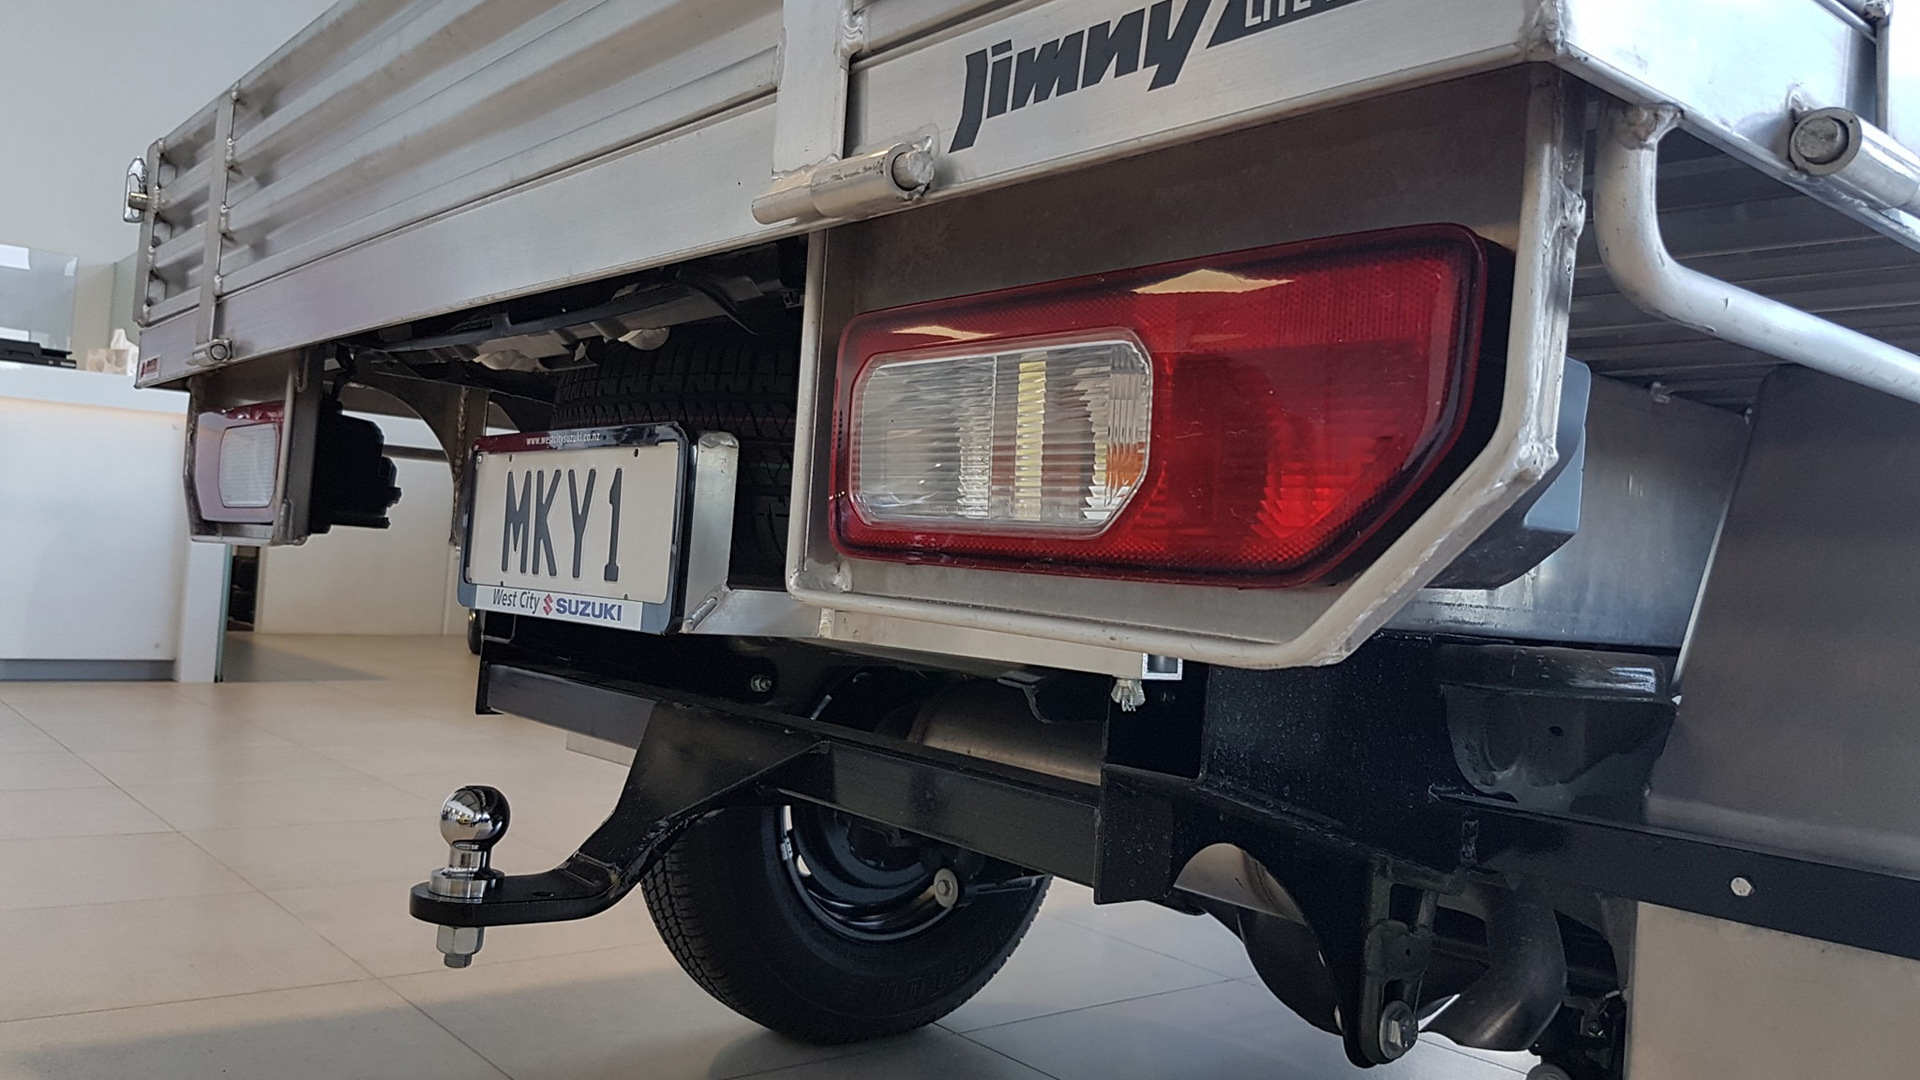 2019 Suzuki Jimny Flatdeck pickup truck conversion - Photo credit: West City Suzuki/Facebook